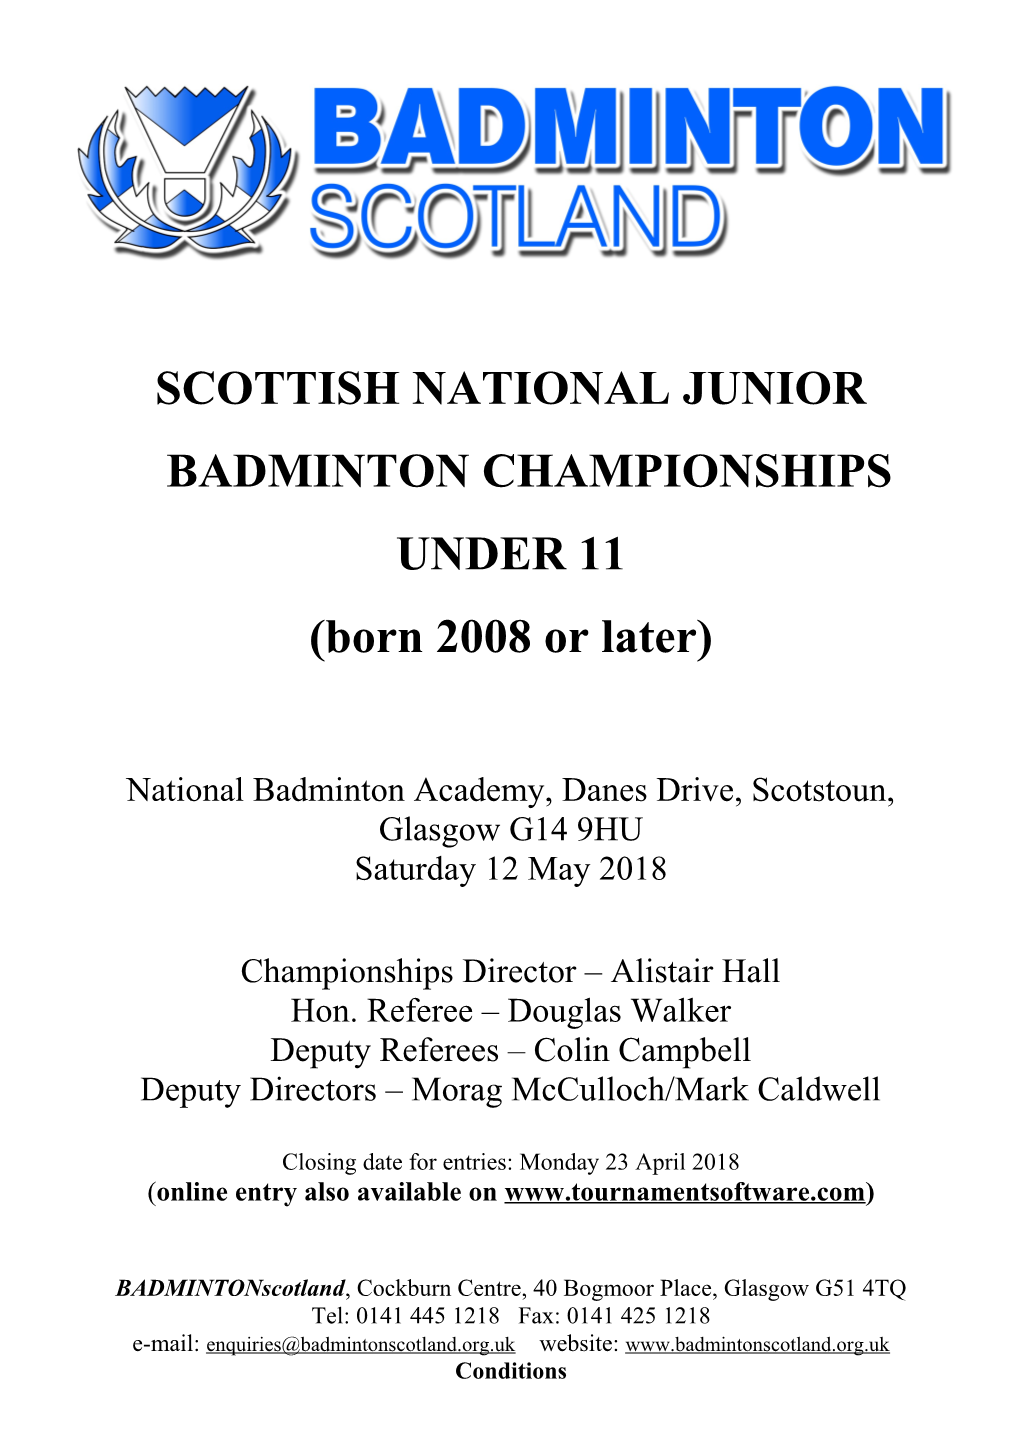 Scottish National Junior Badminton Championships